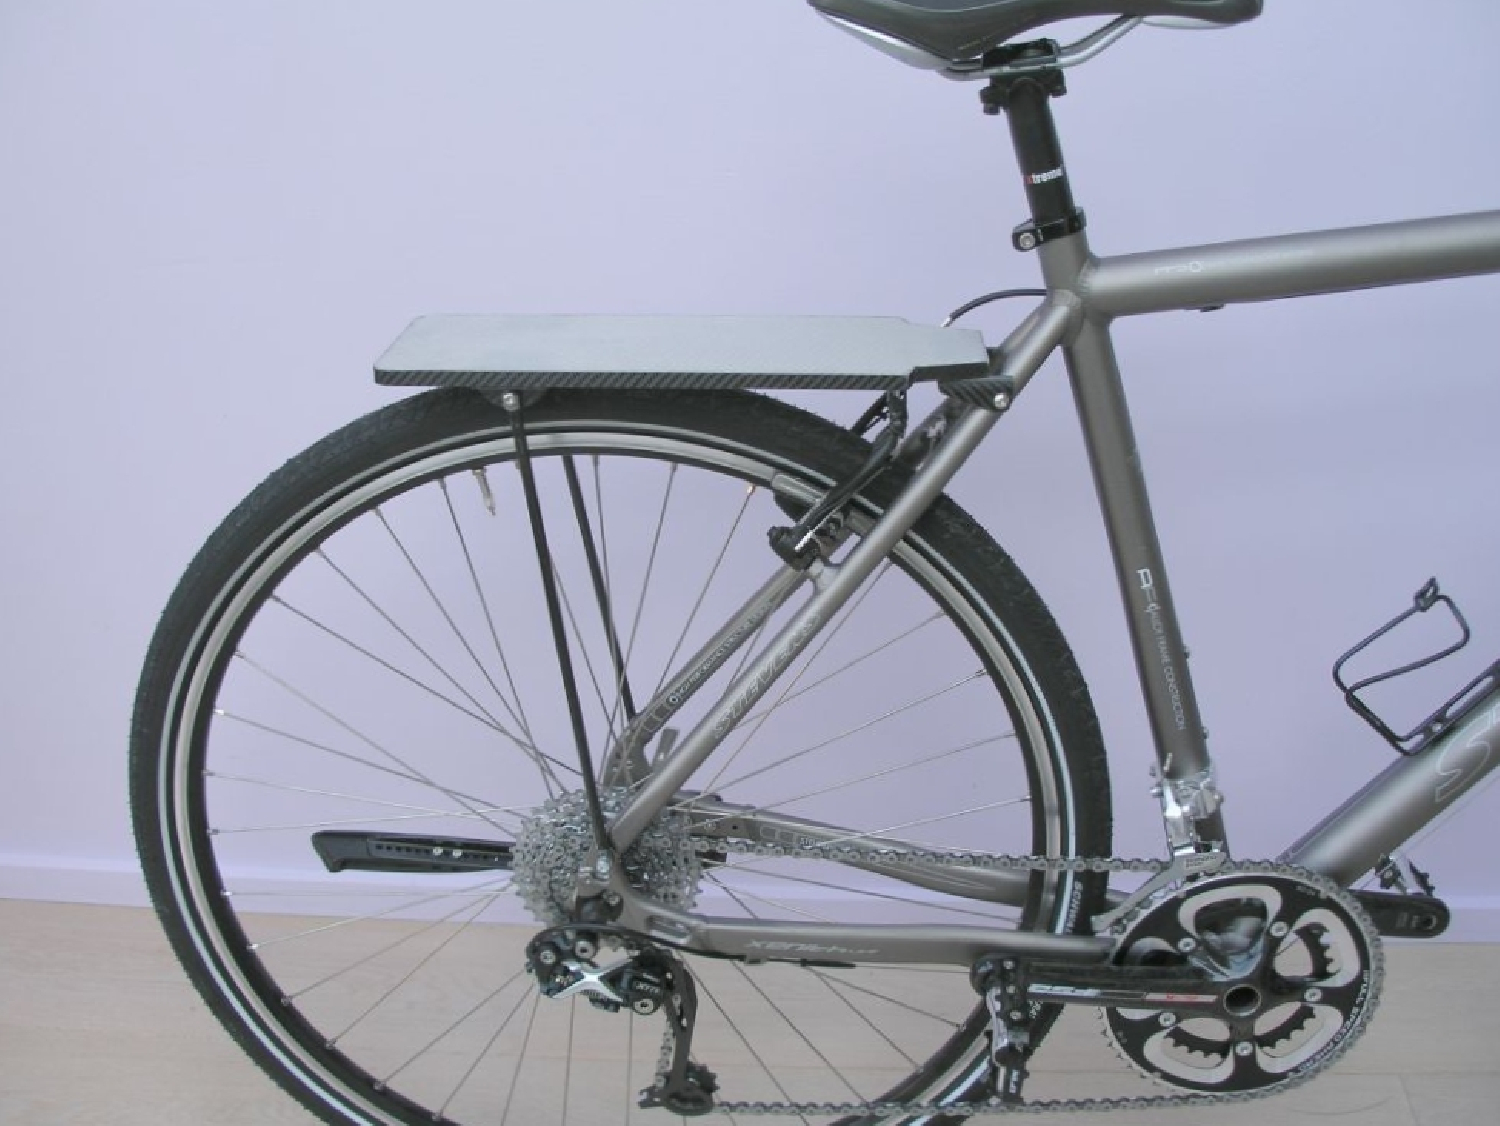 Super lightweight bicycle luggage rack 140g